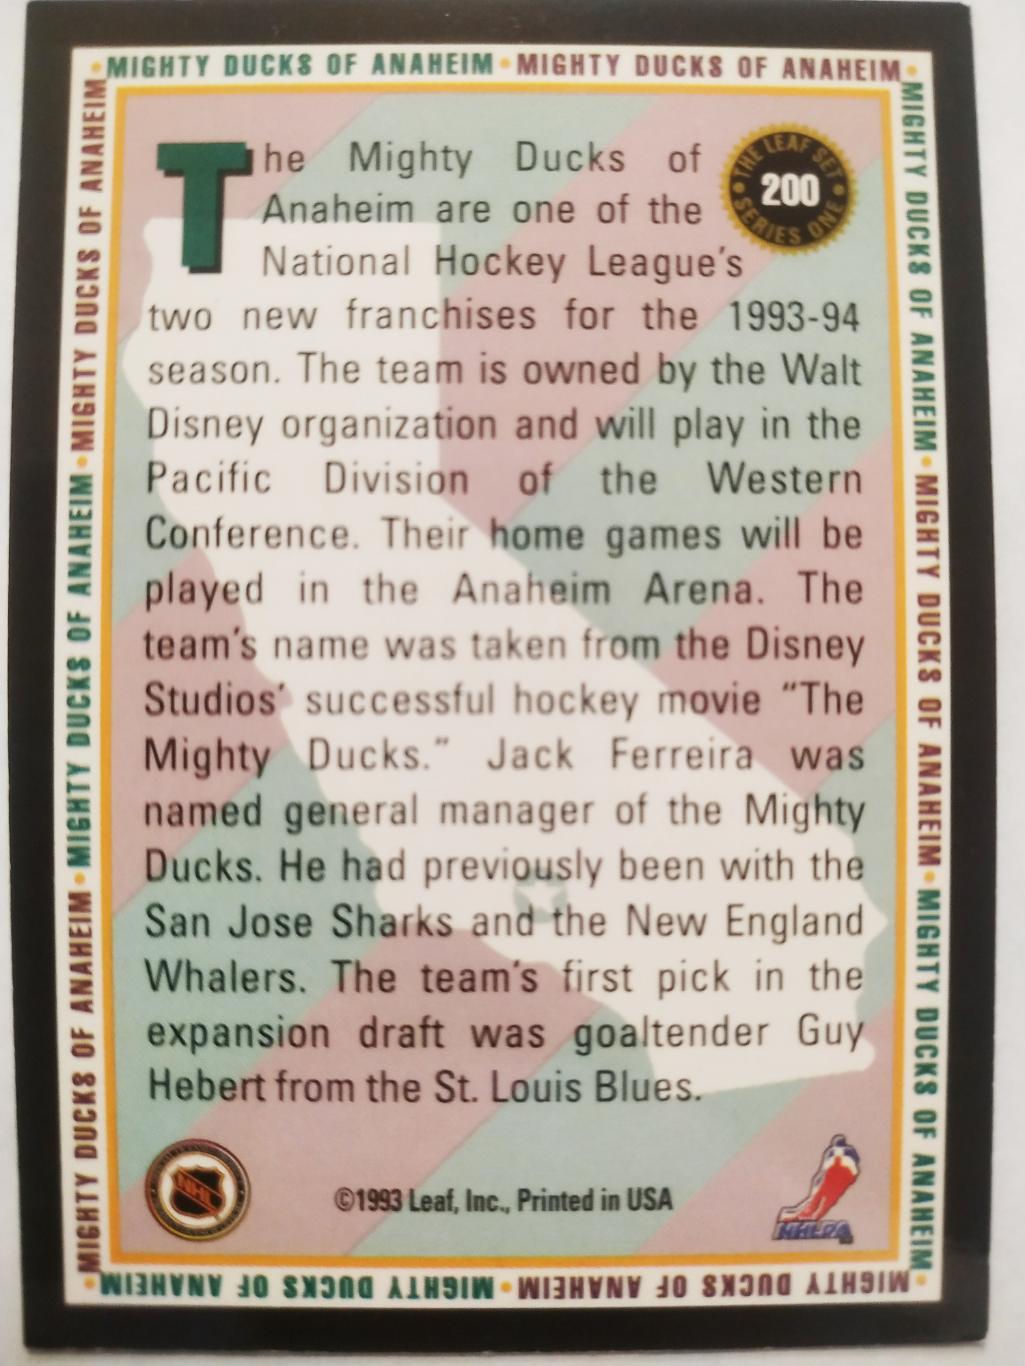 ХОККЕЙ КАРТОЧКА НХЛ LEAF SET SERIES ONE 1993-94 MIGHTY DUCKS ANAHEIM TEAM #200 1